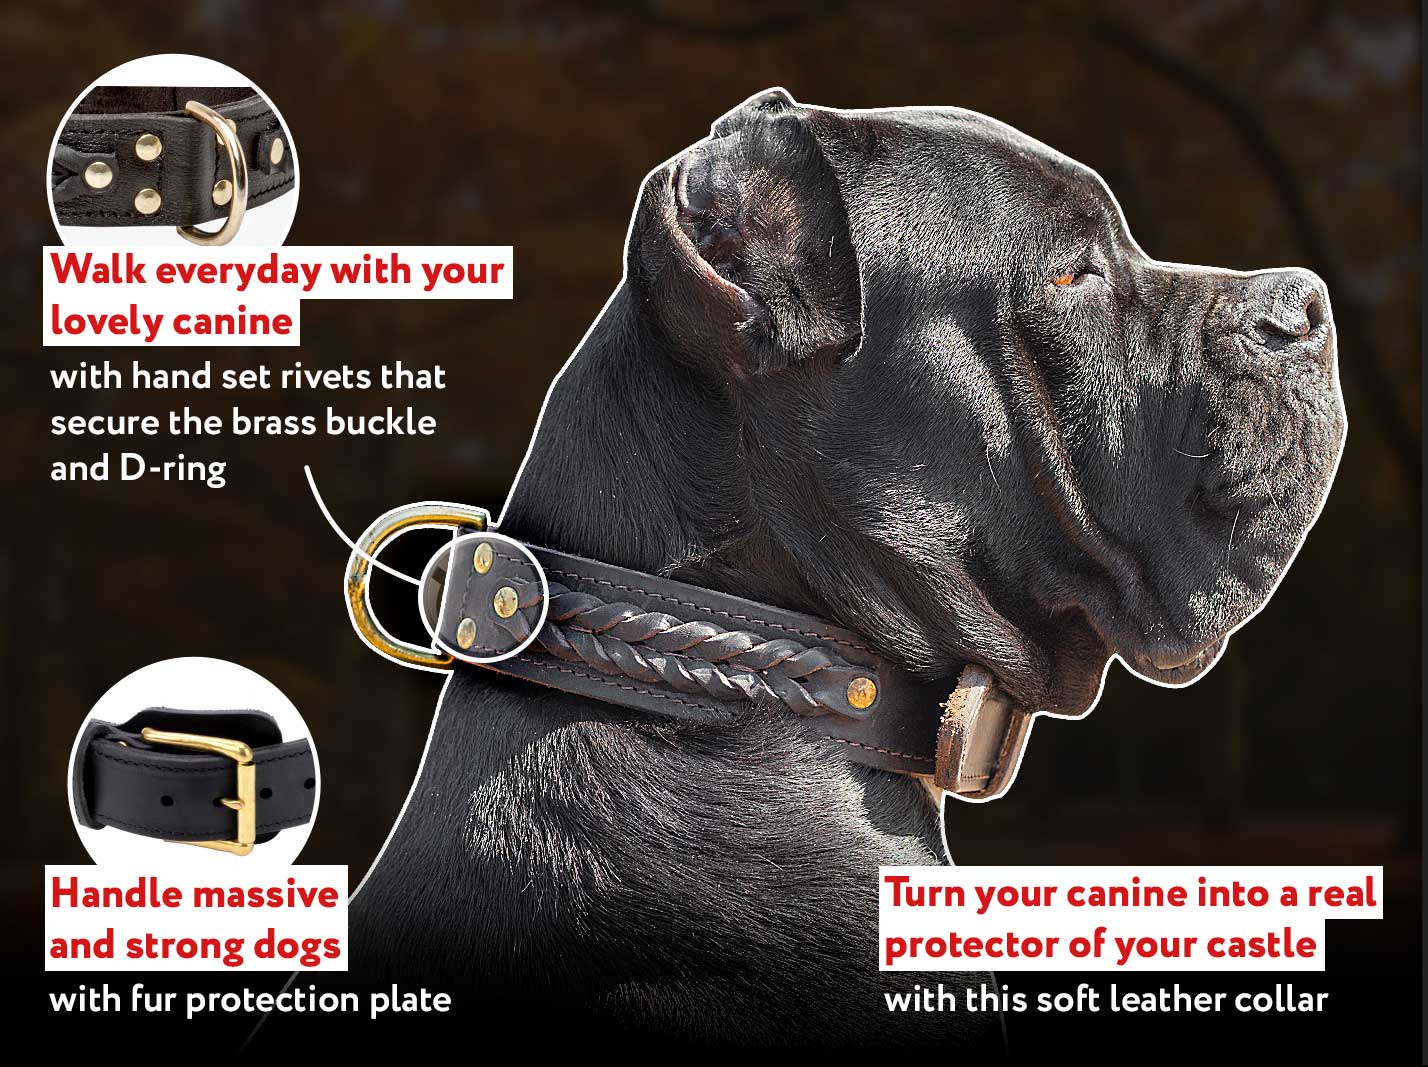 Designer Dog Collars, Leather Dog Collars